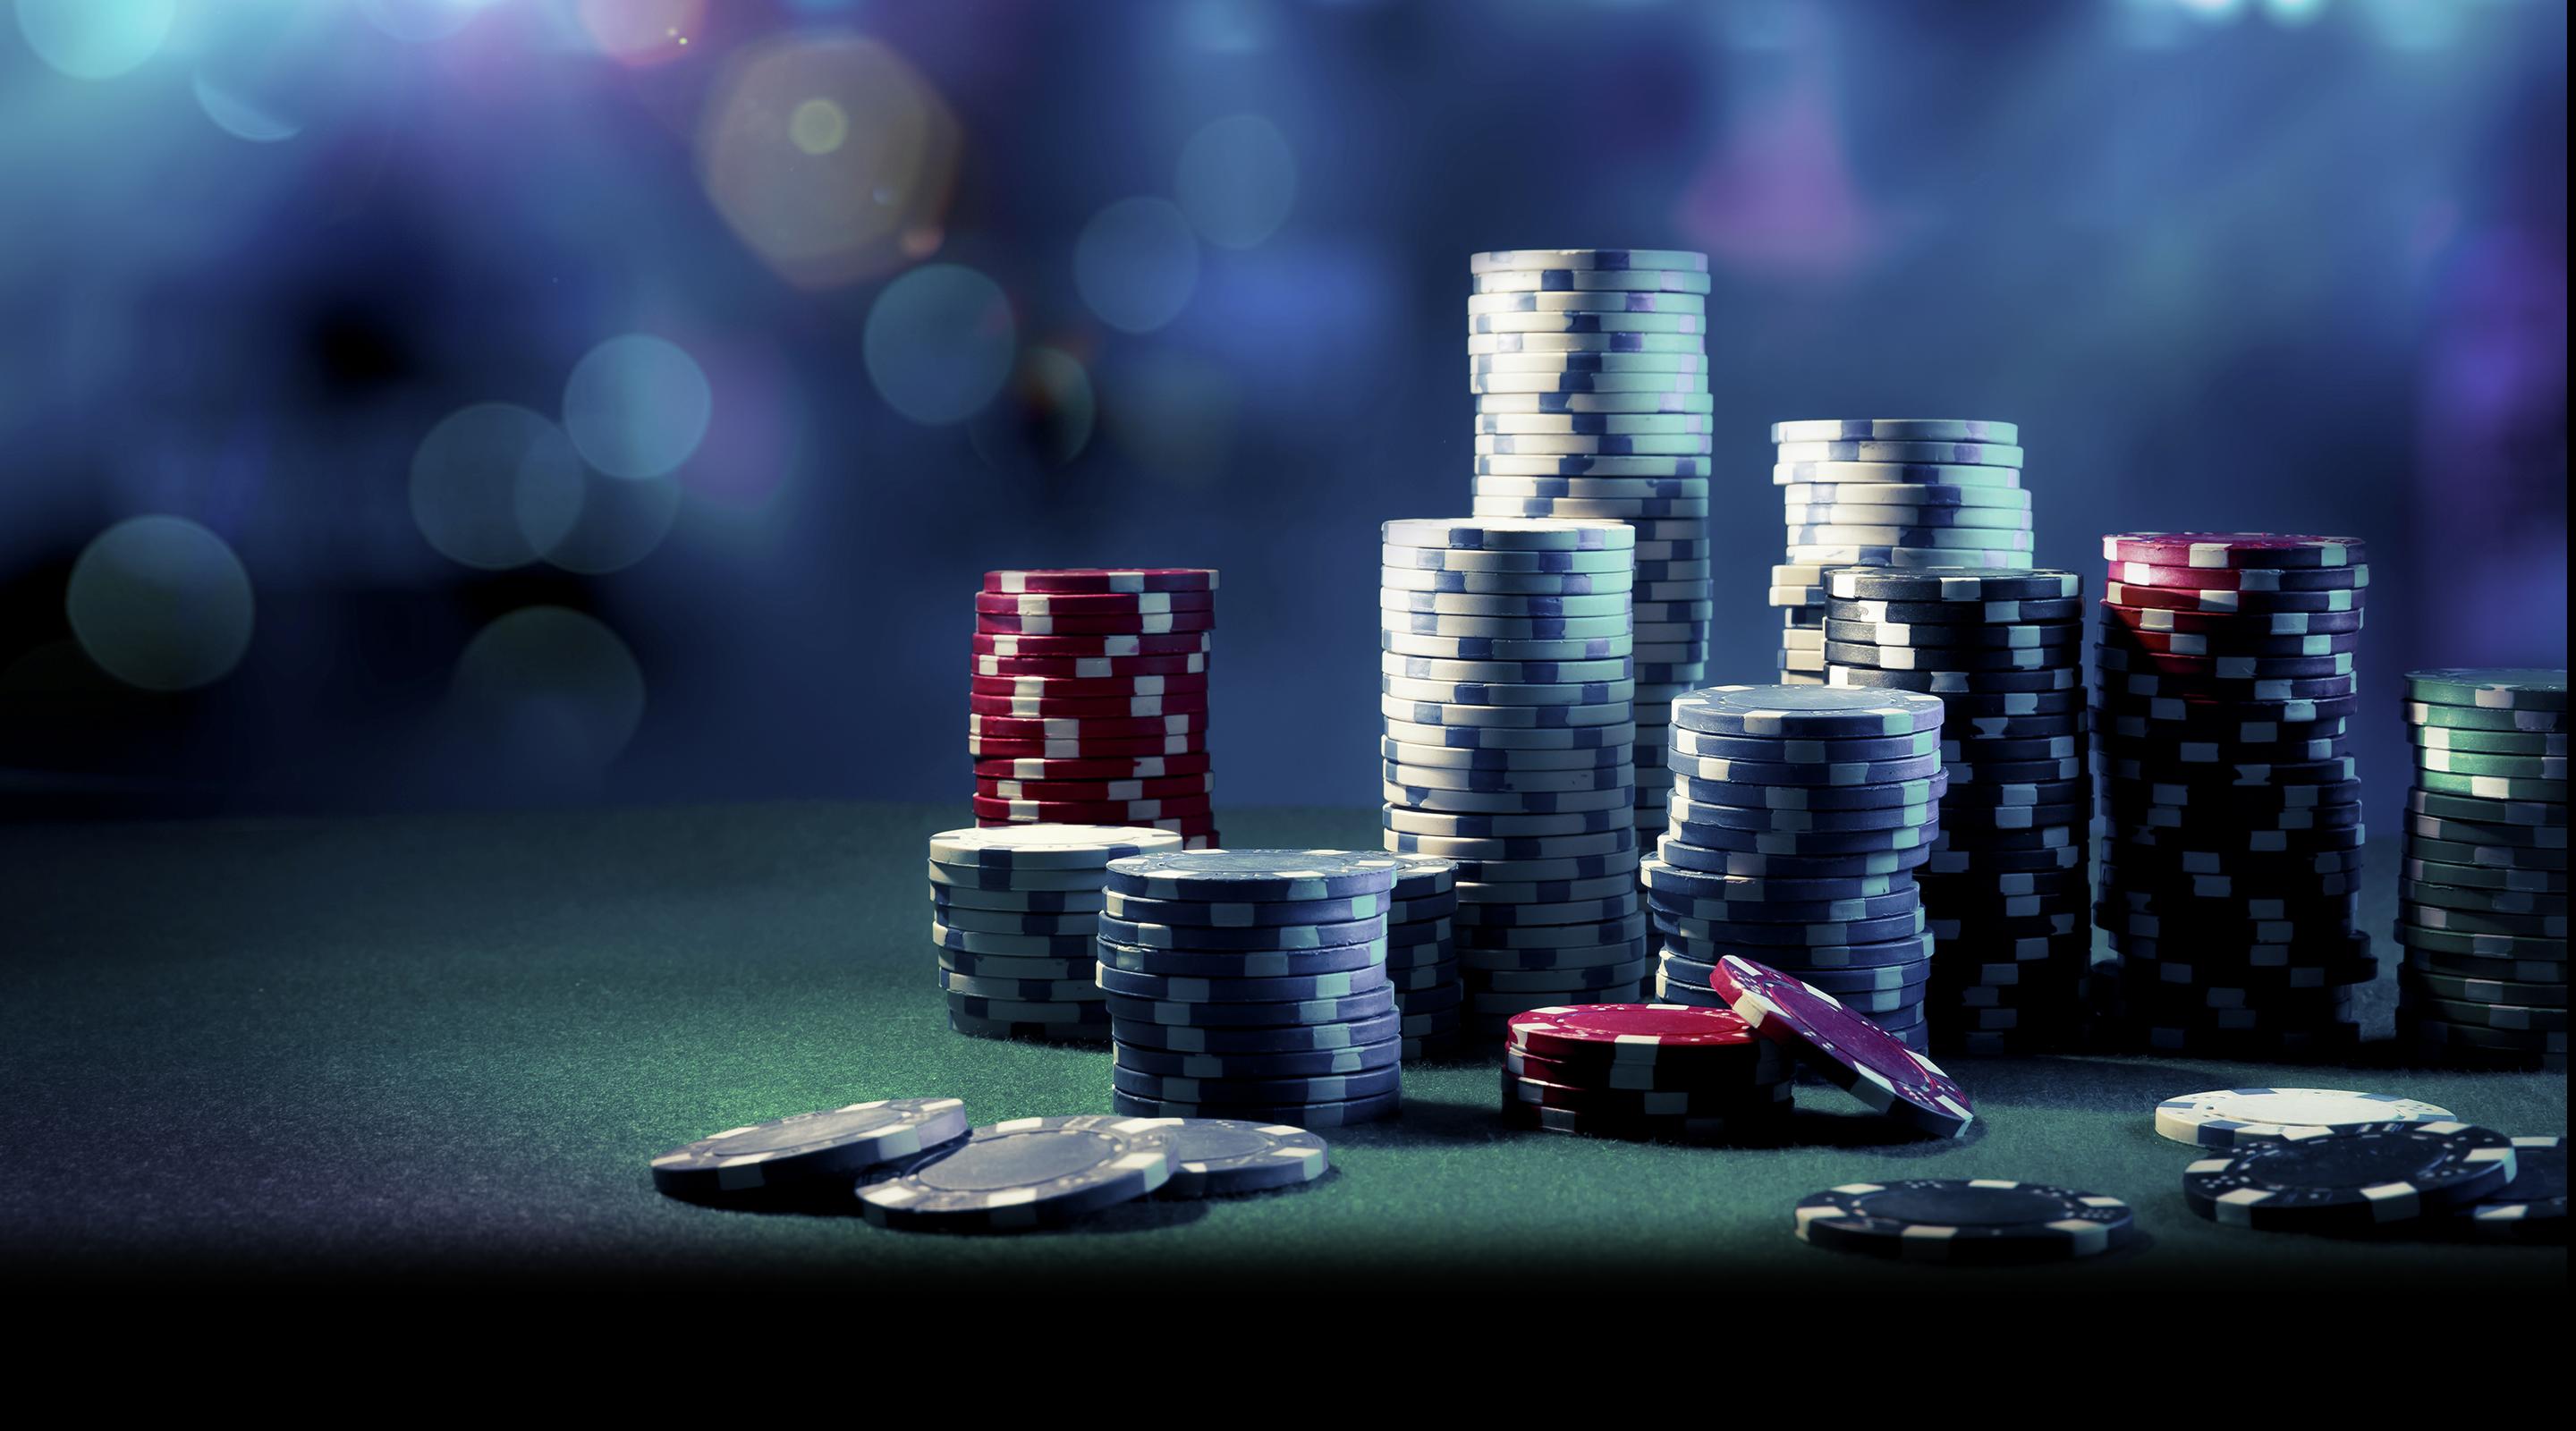 rejekipoker.Com situs agen poker domino dan capsa susun on-line terpercaya indonesia